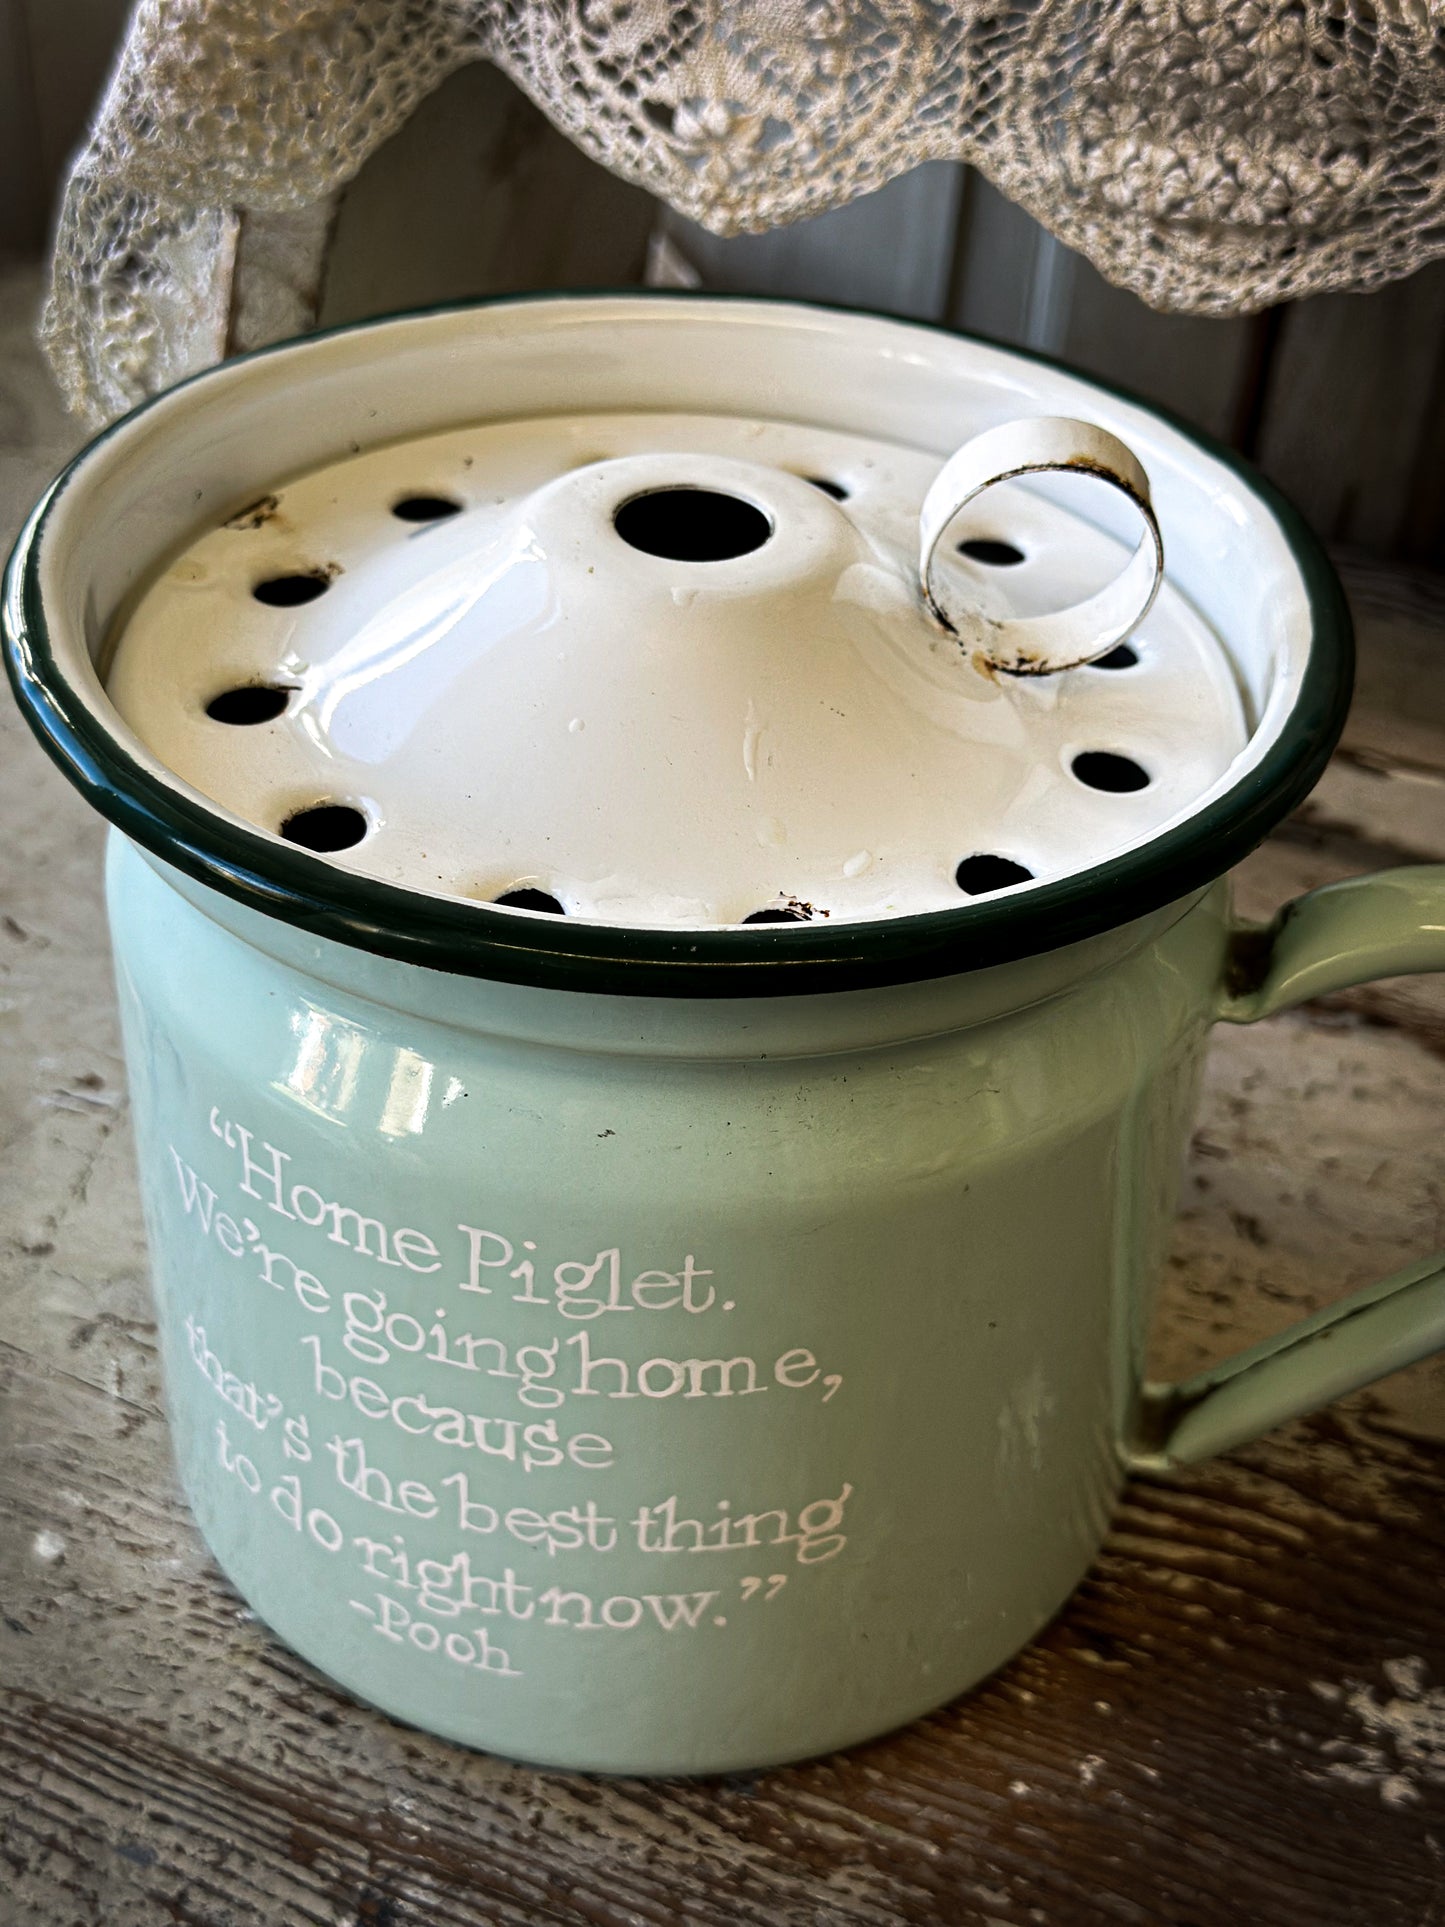 A beautiful vintage French enamel jug